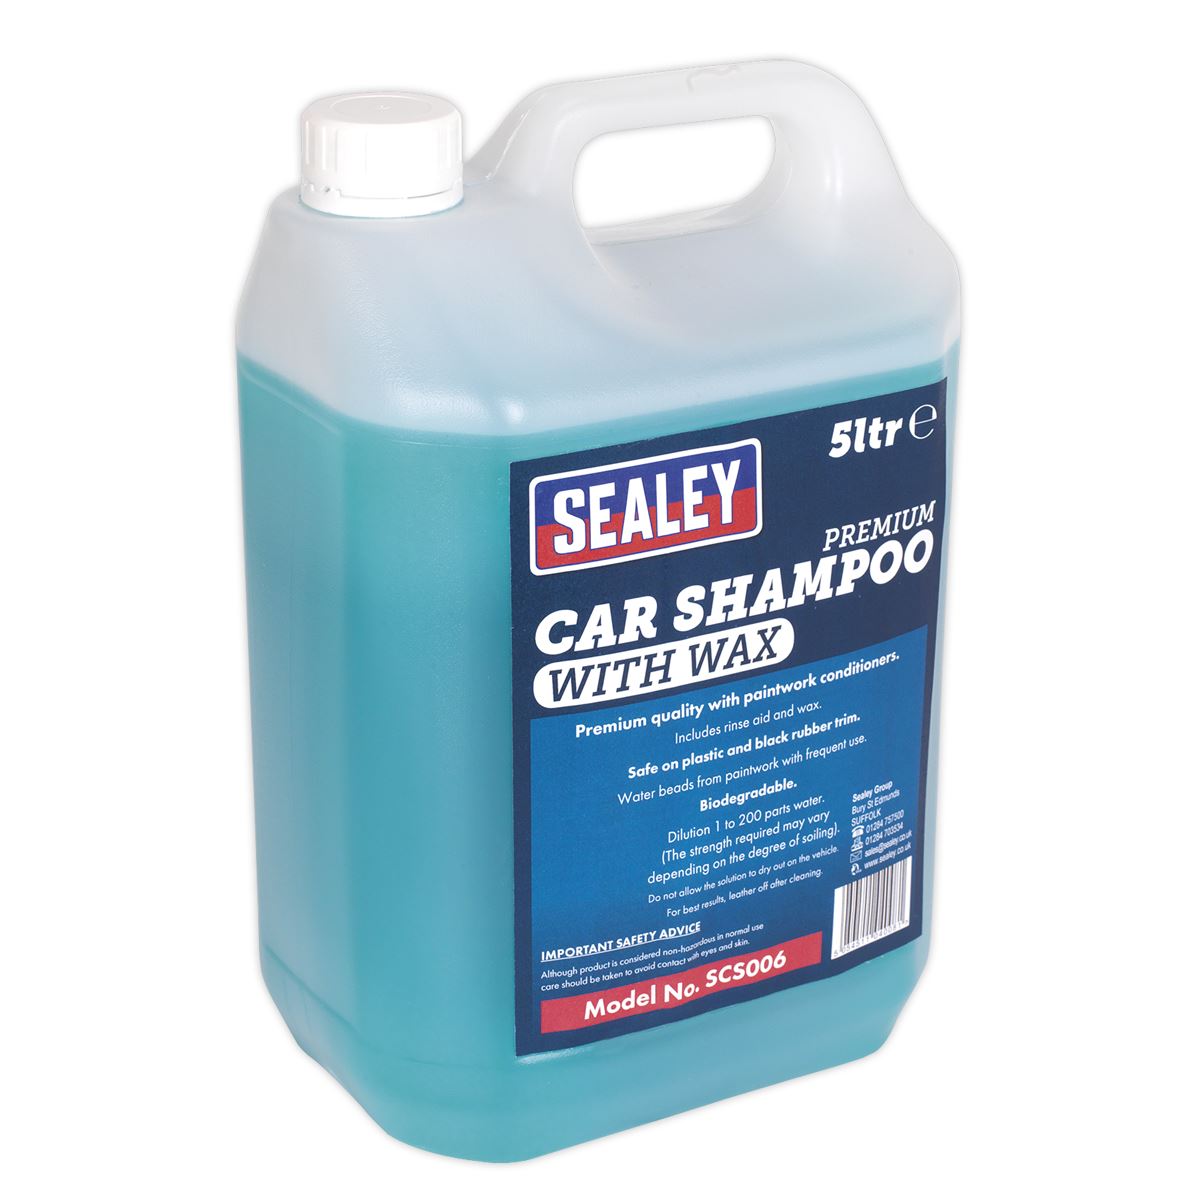 Sealey Car Shampoo Premium with Wax 5L